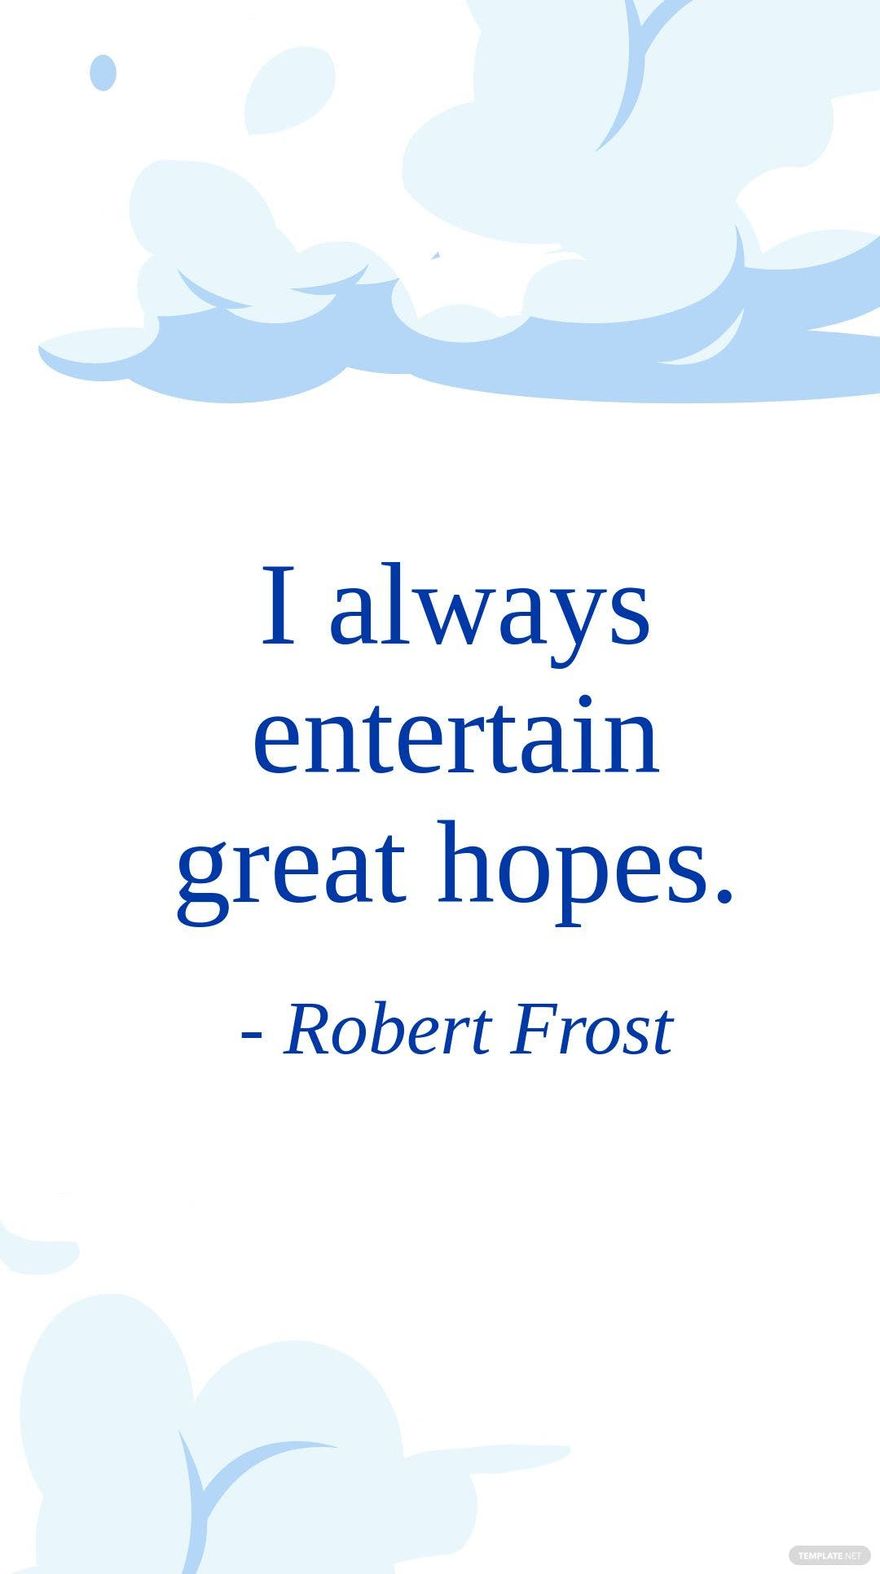 Free Robert Frost - I always entertain great hopes. in JPG